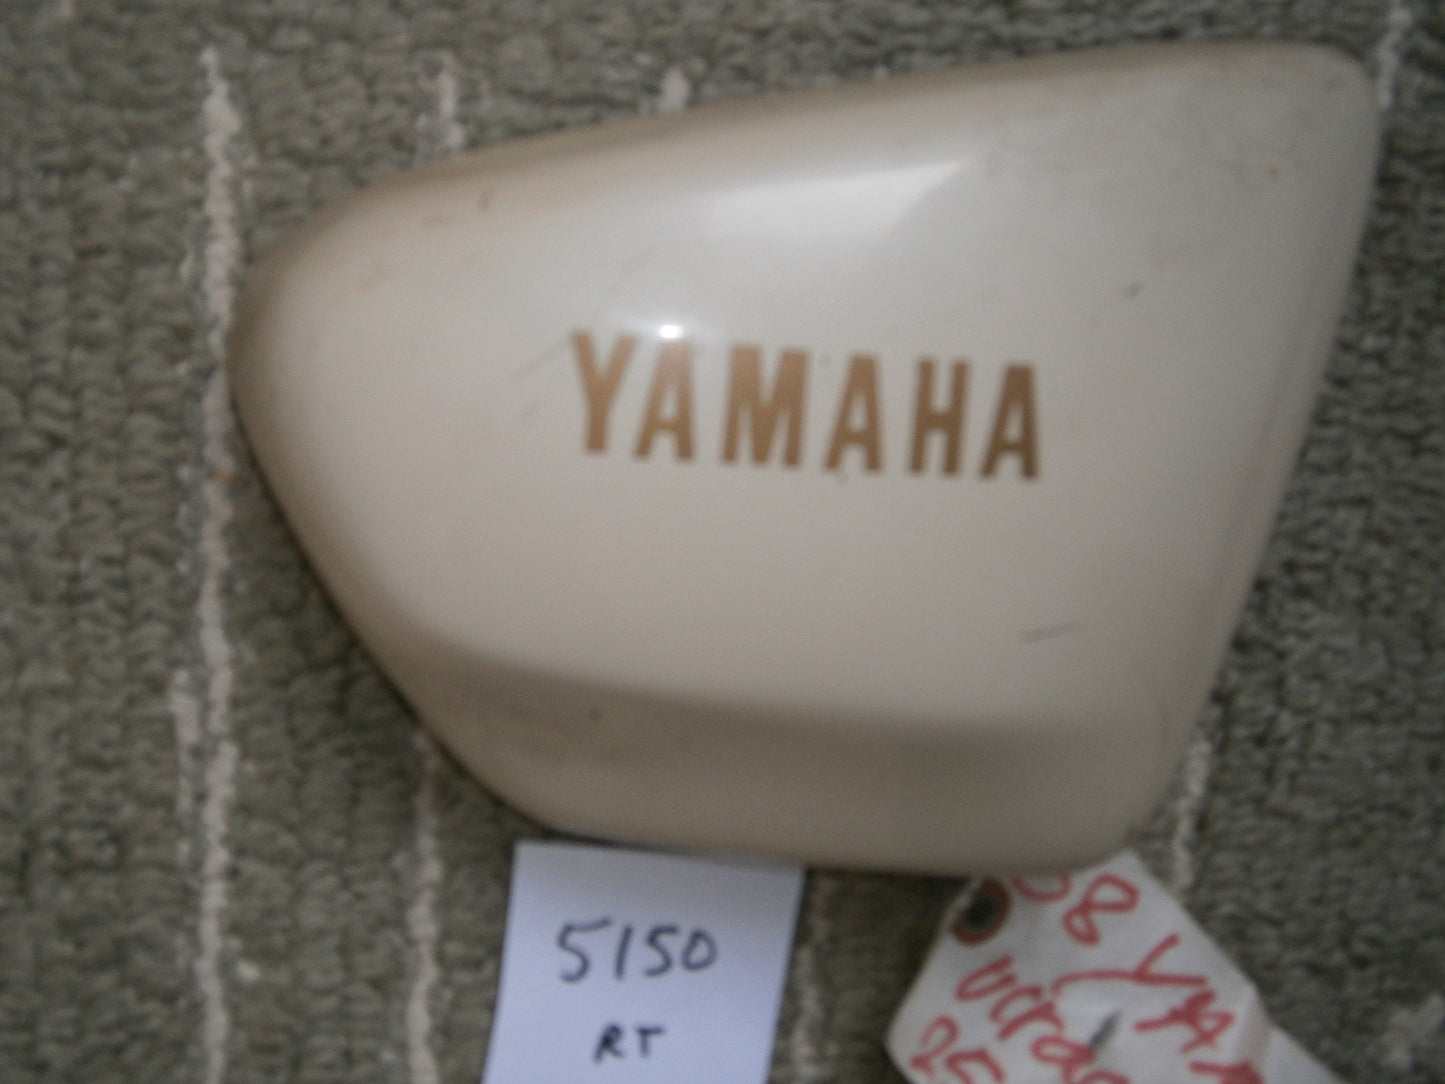 Yamaha XV250 Virago Sidecover Rt White 5150